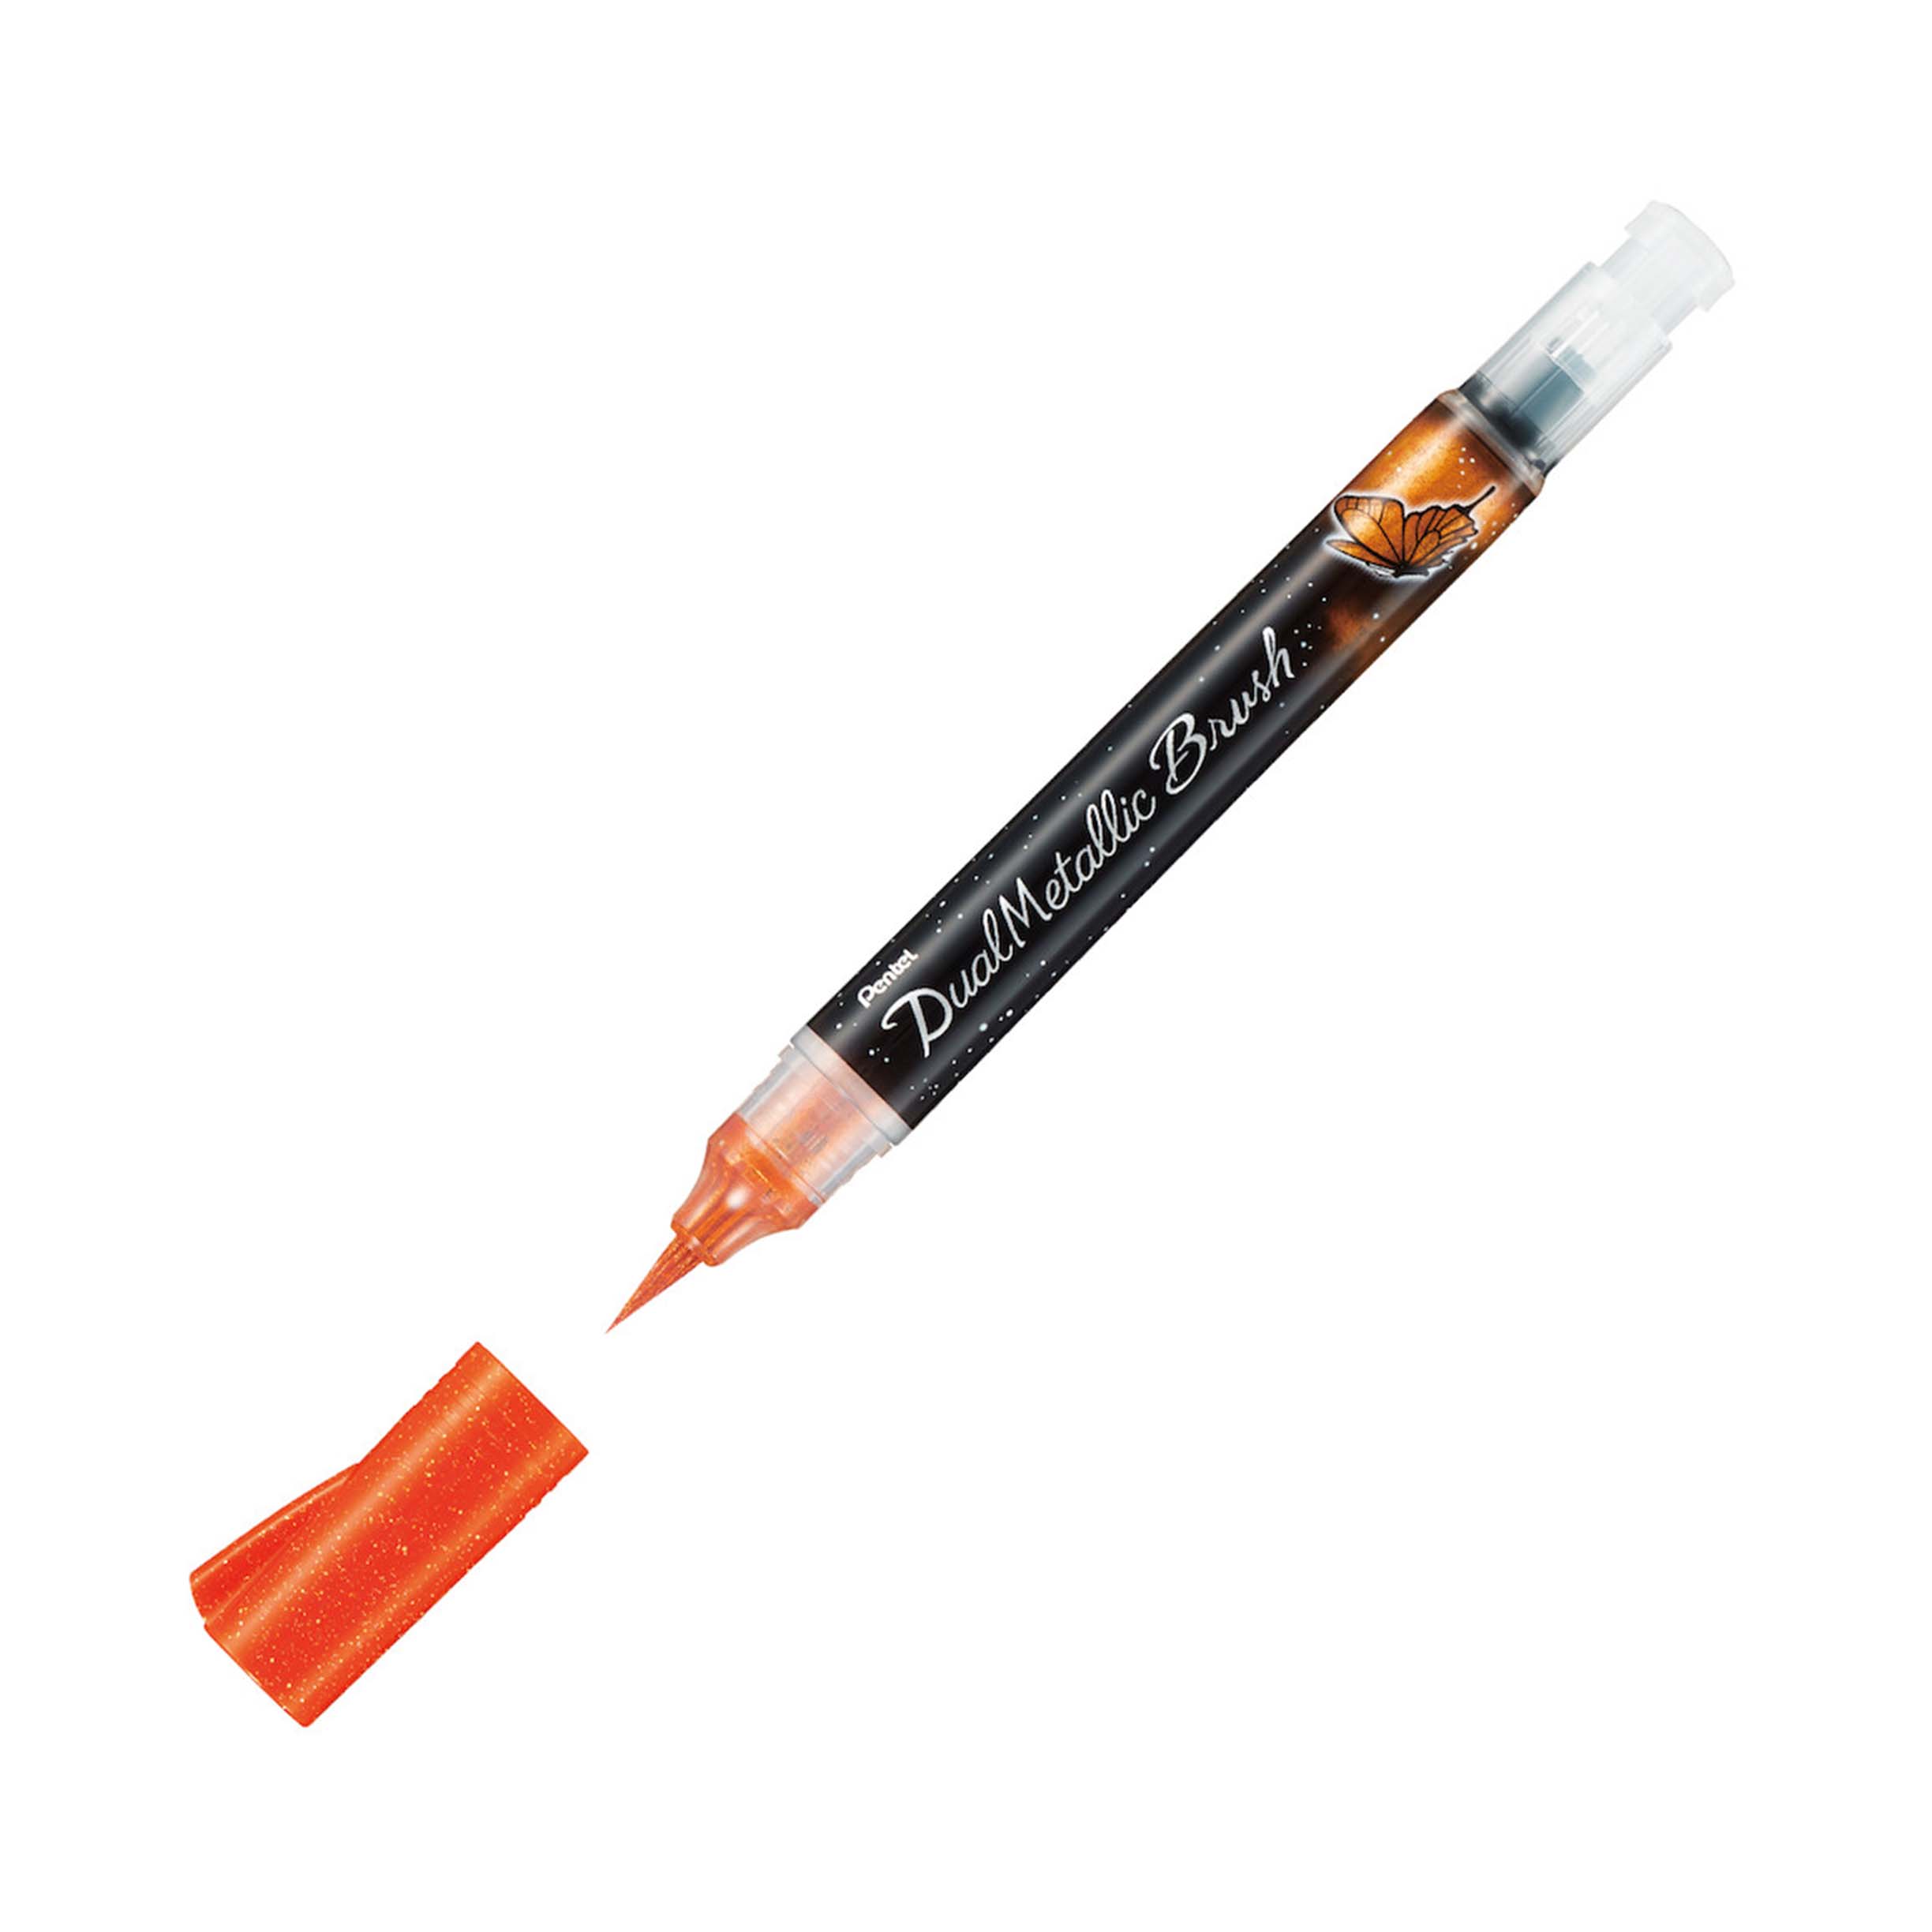 Pentel Dual Metallic Brush Pen